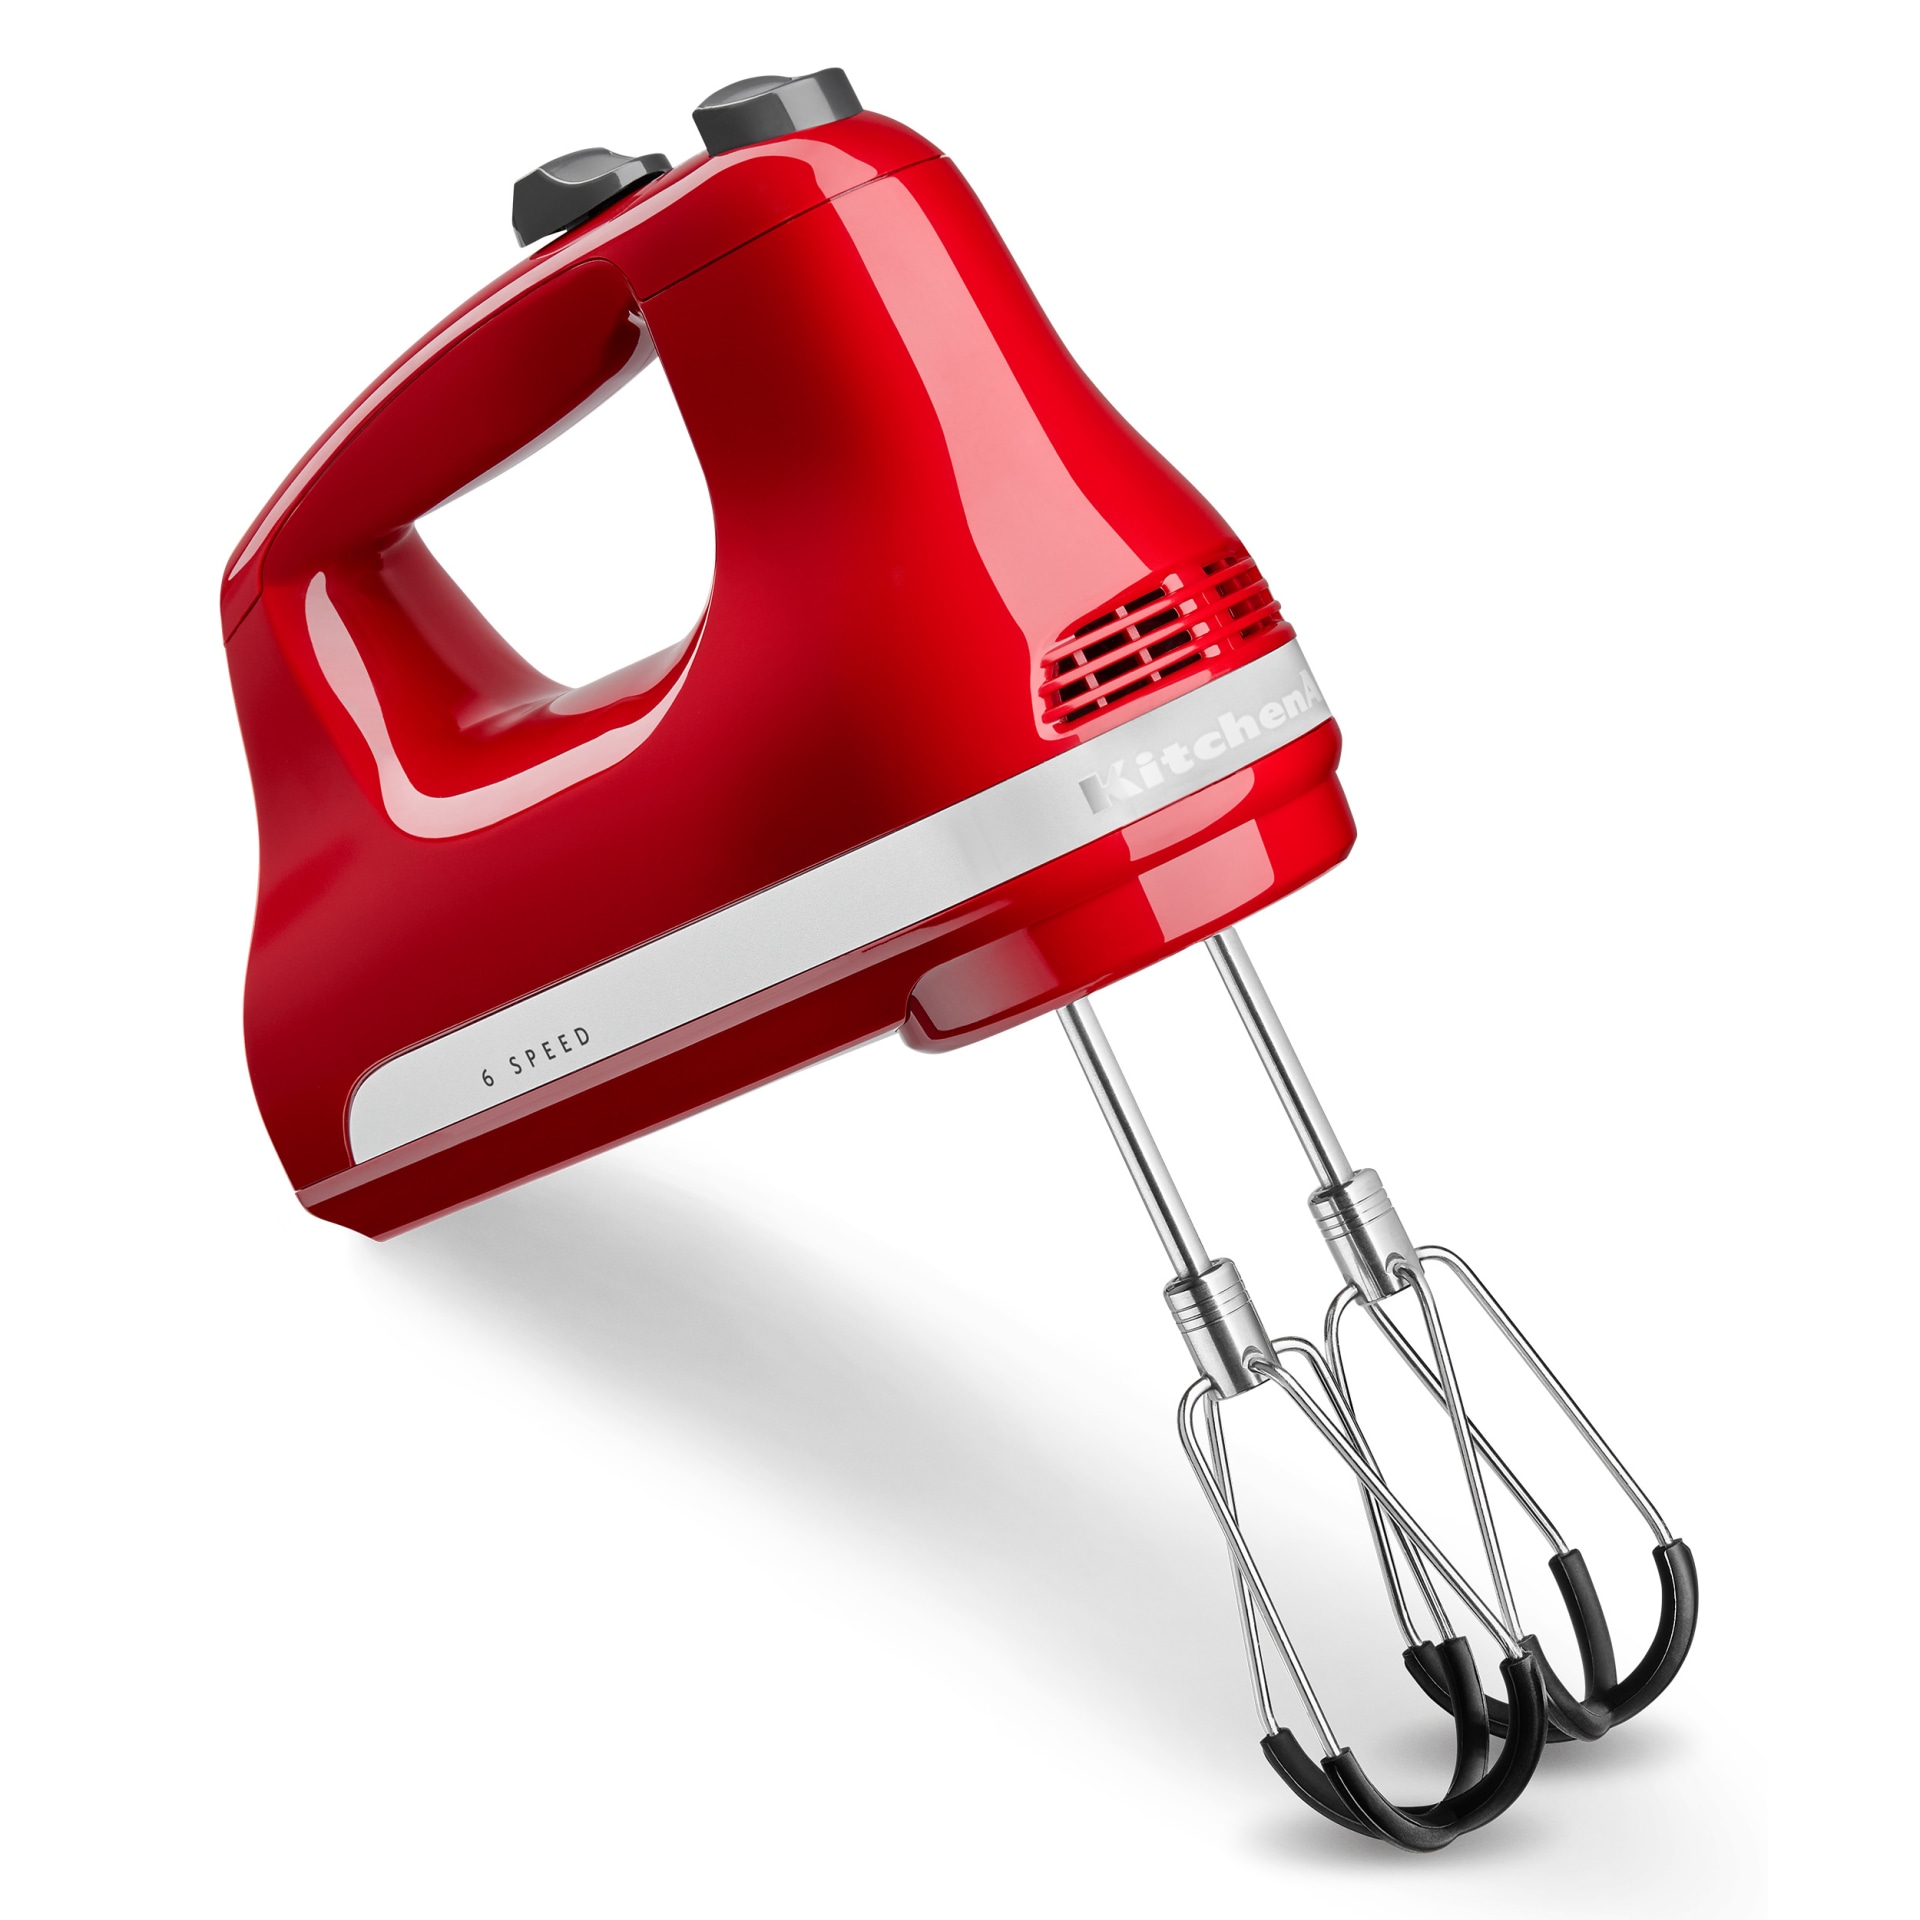 KitchenAid 6 Speed Hand Mixer with Flex Edge Beaters - KHM6118 & KFC3516CU  3.5 Cup Food Chopper, Contour Silver